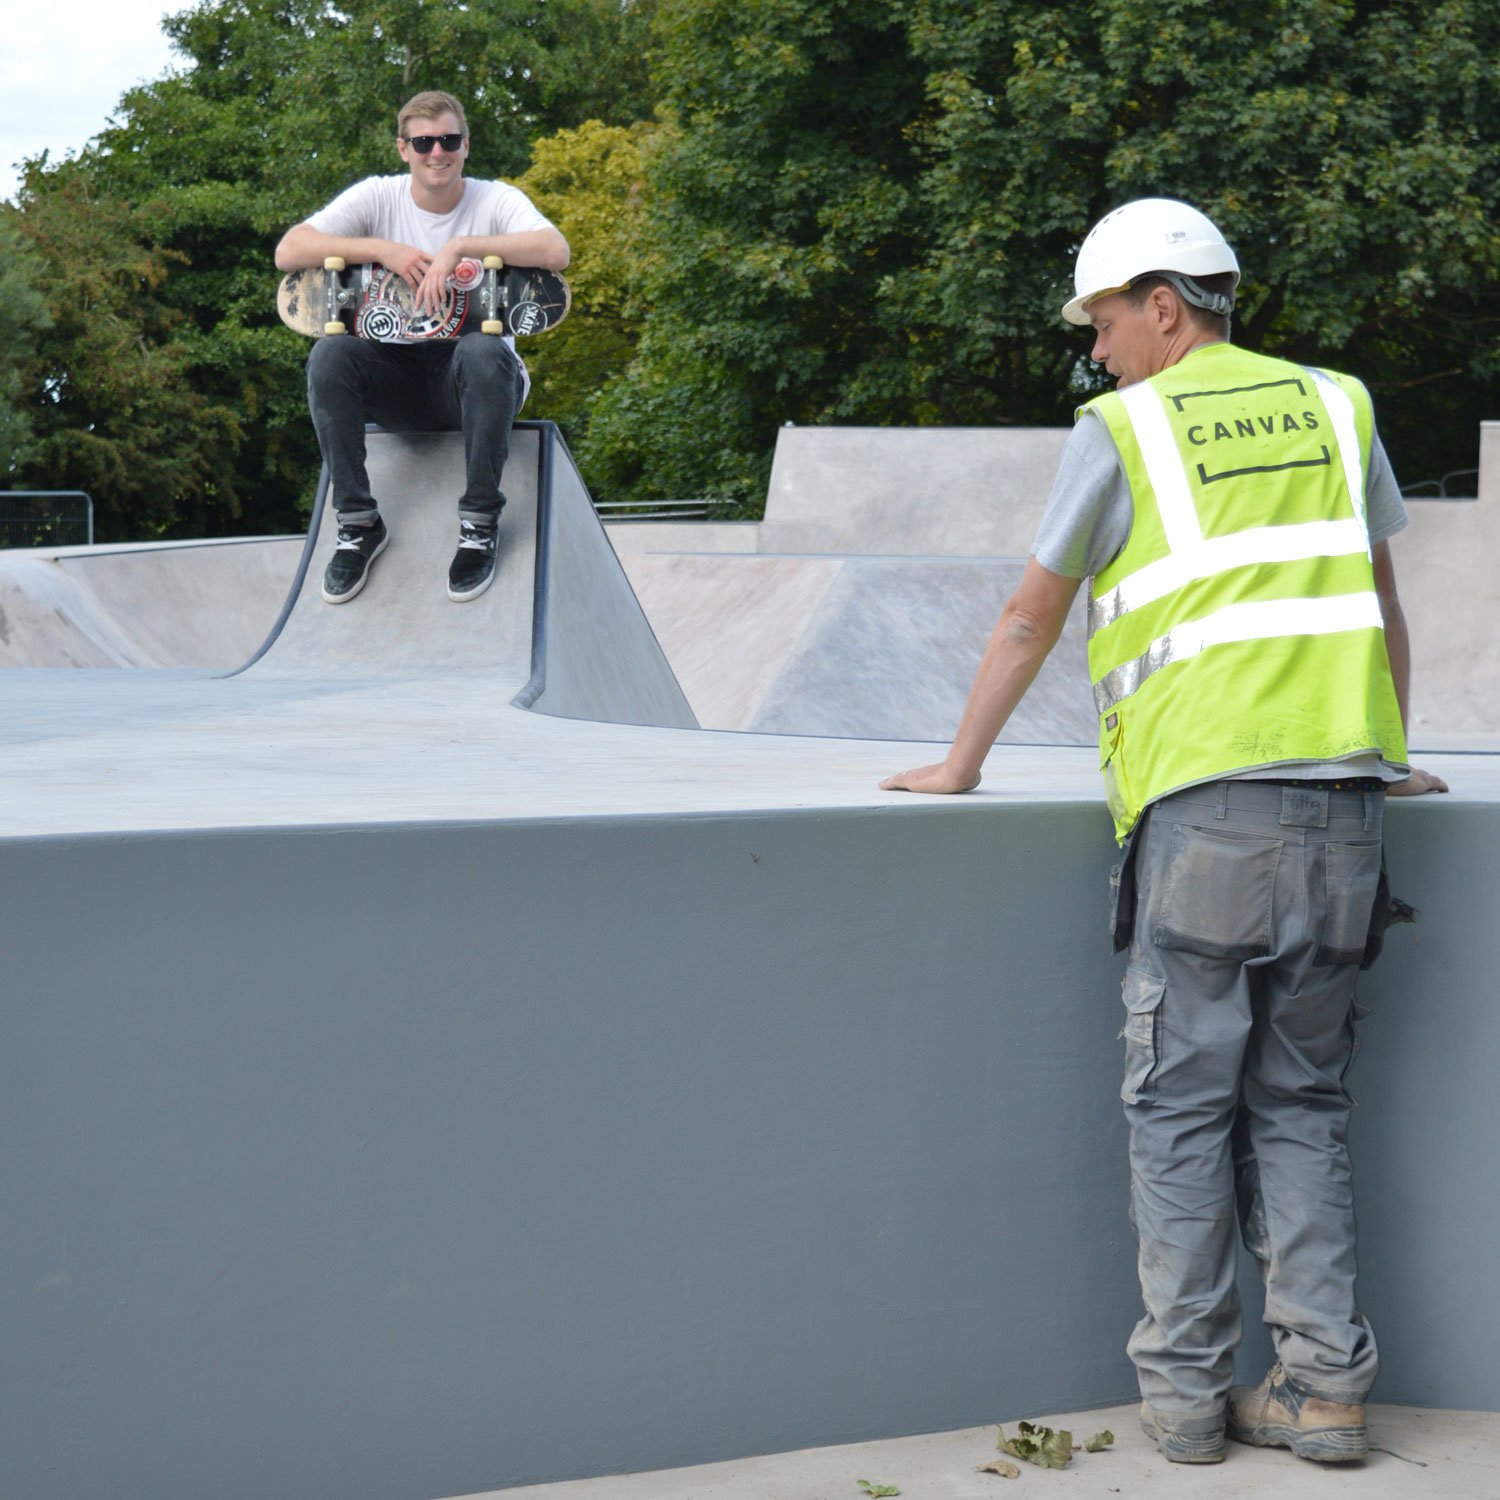 Skatepark Construction Company — CANVAS Skateparks and Public Spaces